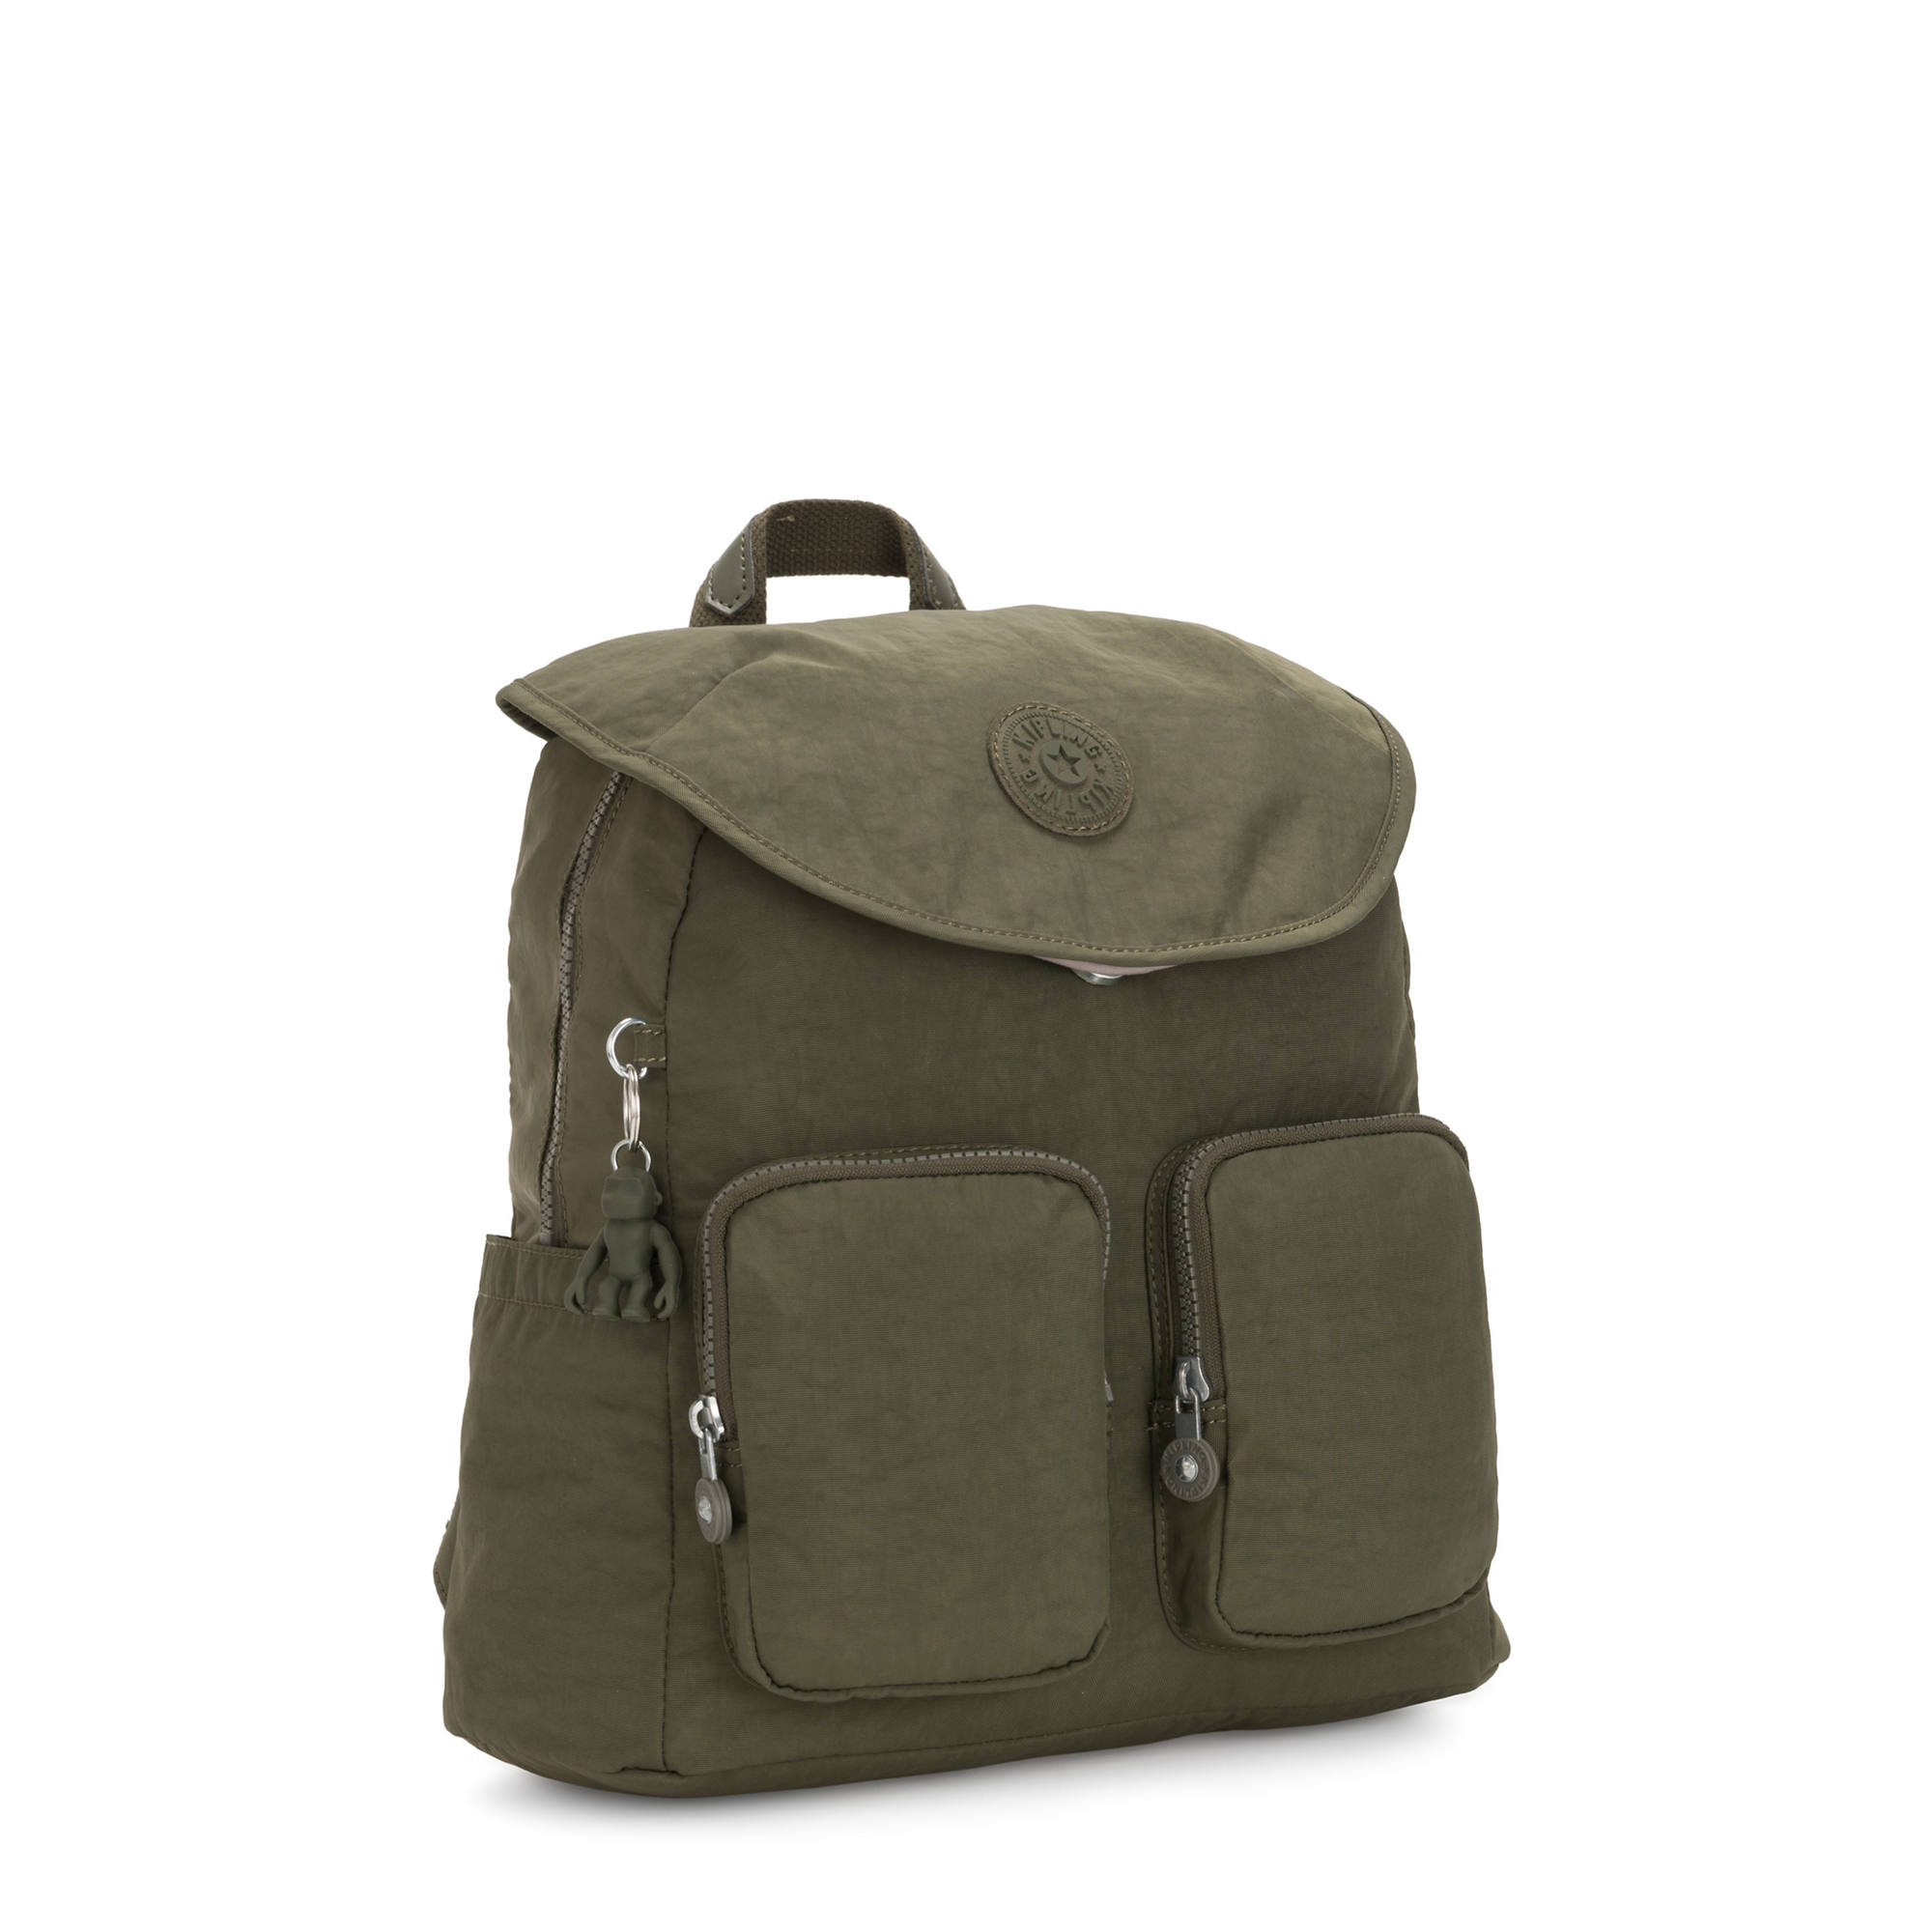 Kipling Fiona Medium Metallic Backpack | eBay